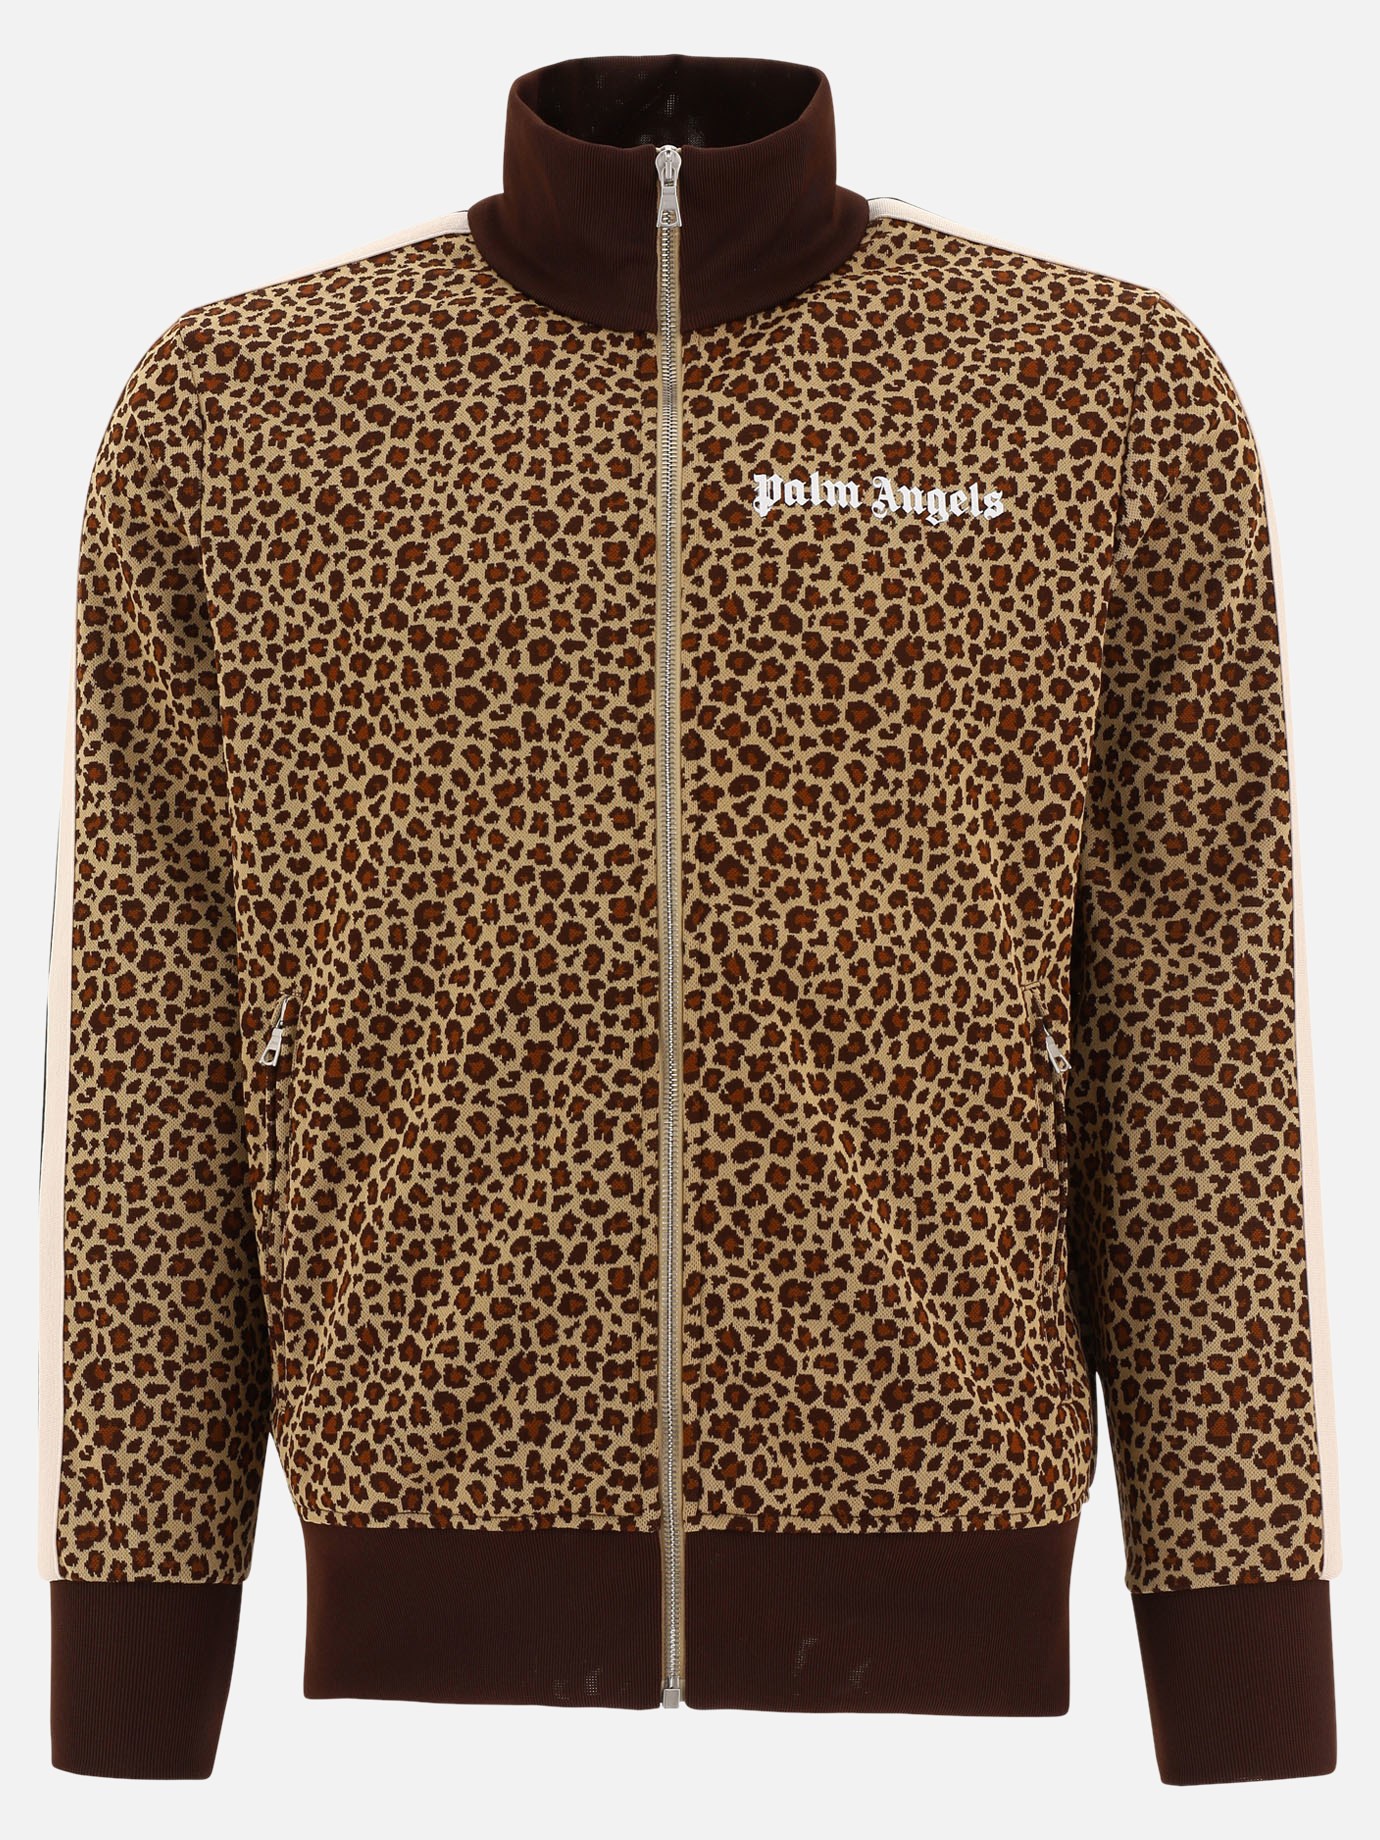  Leopard  sweatshirtby Palm Angels - 5